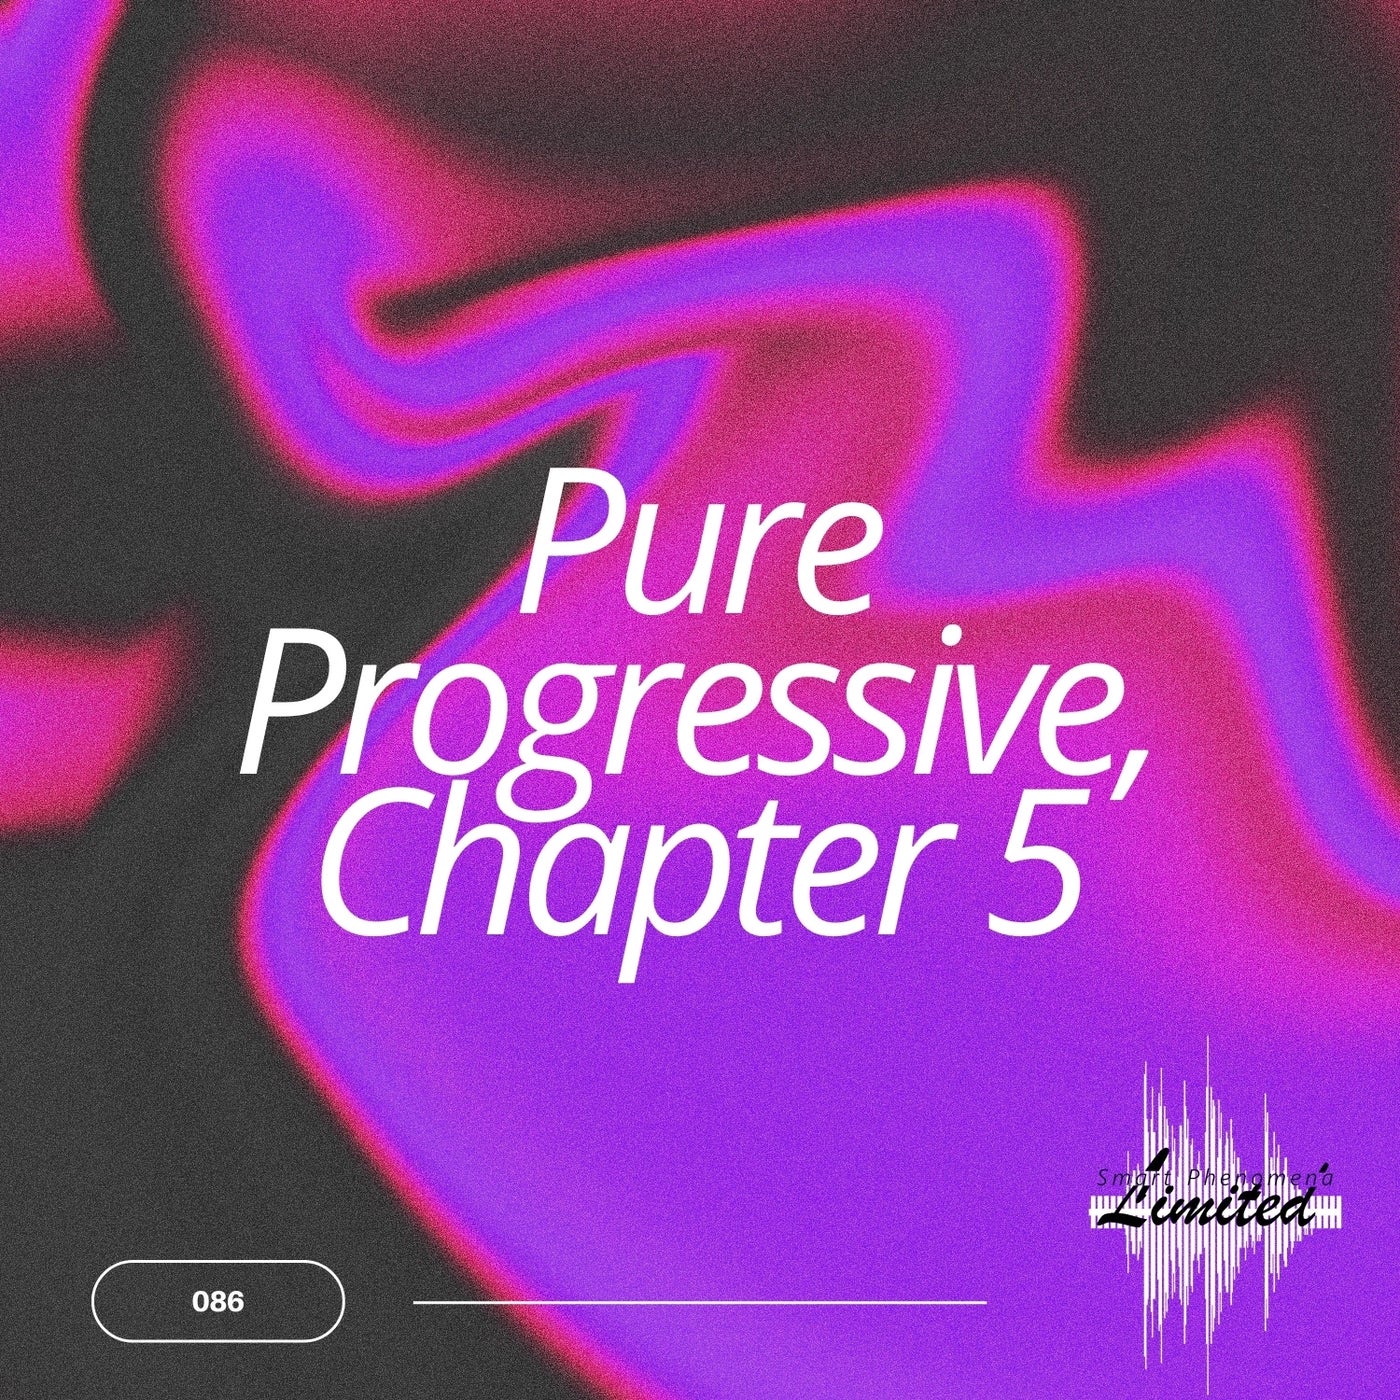 Pure Progressive, Chapter 5